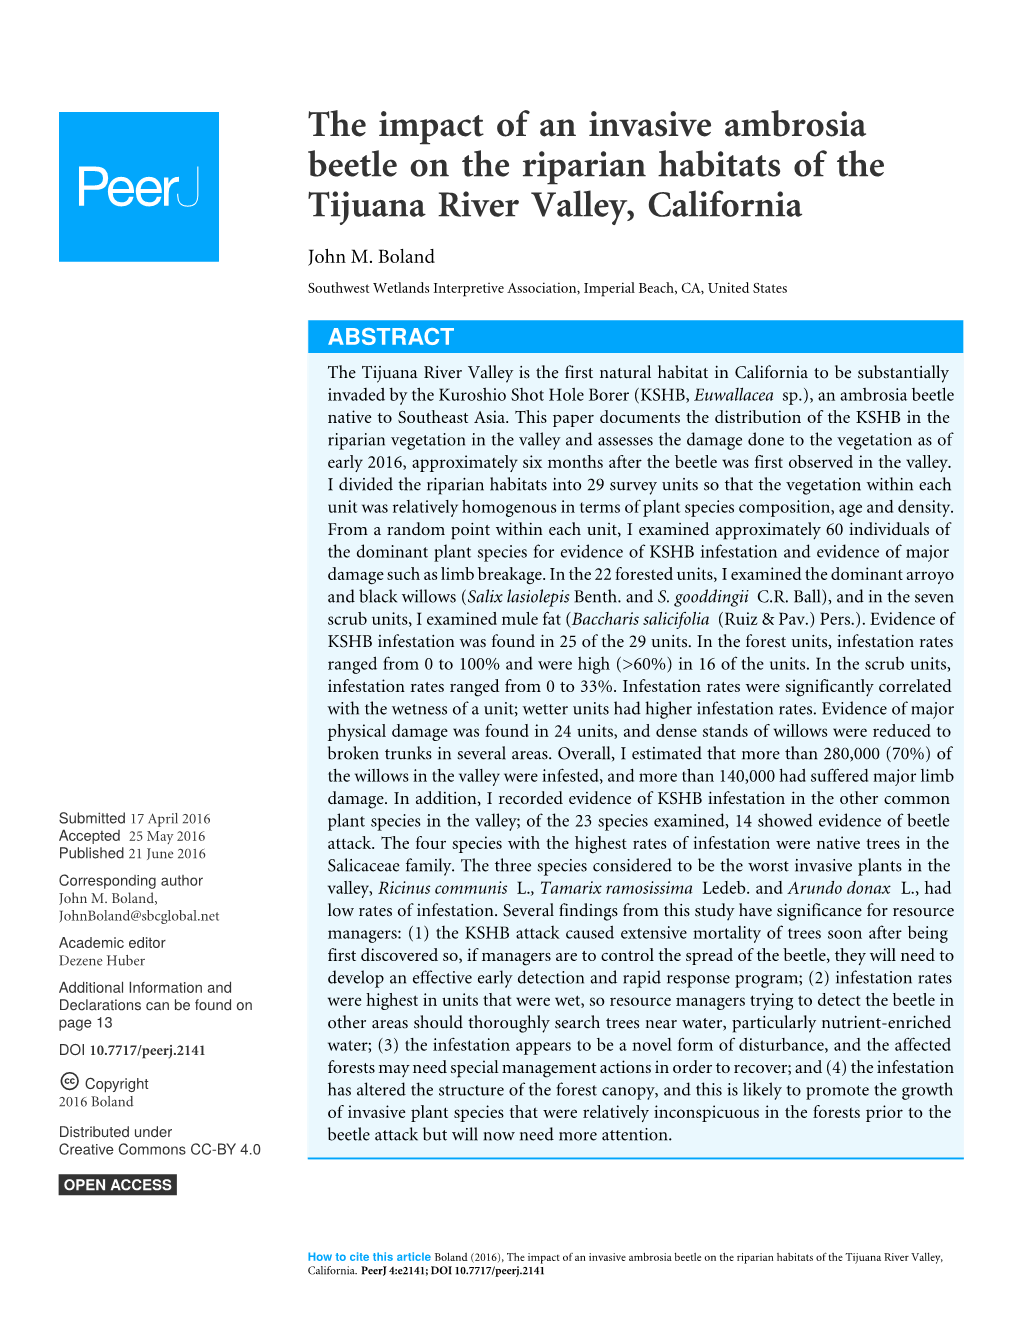 The Impact of an Invasive Ambrosia Beetle on the Riparian Habitats of the Tijuana River Valley, California